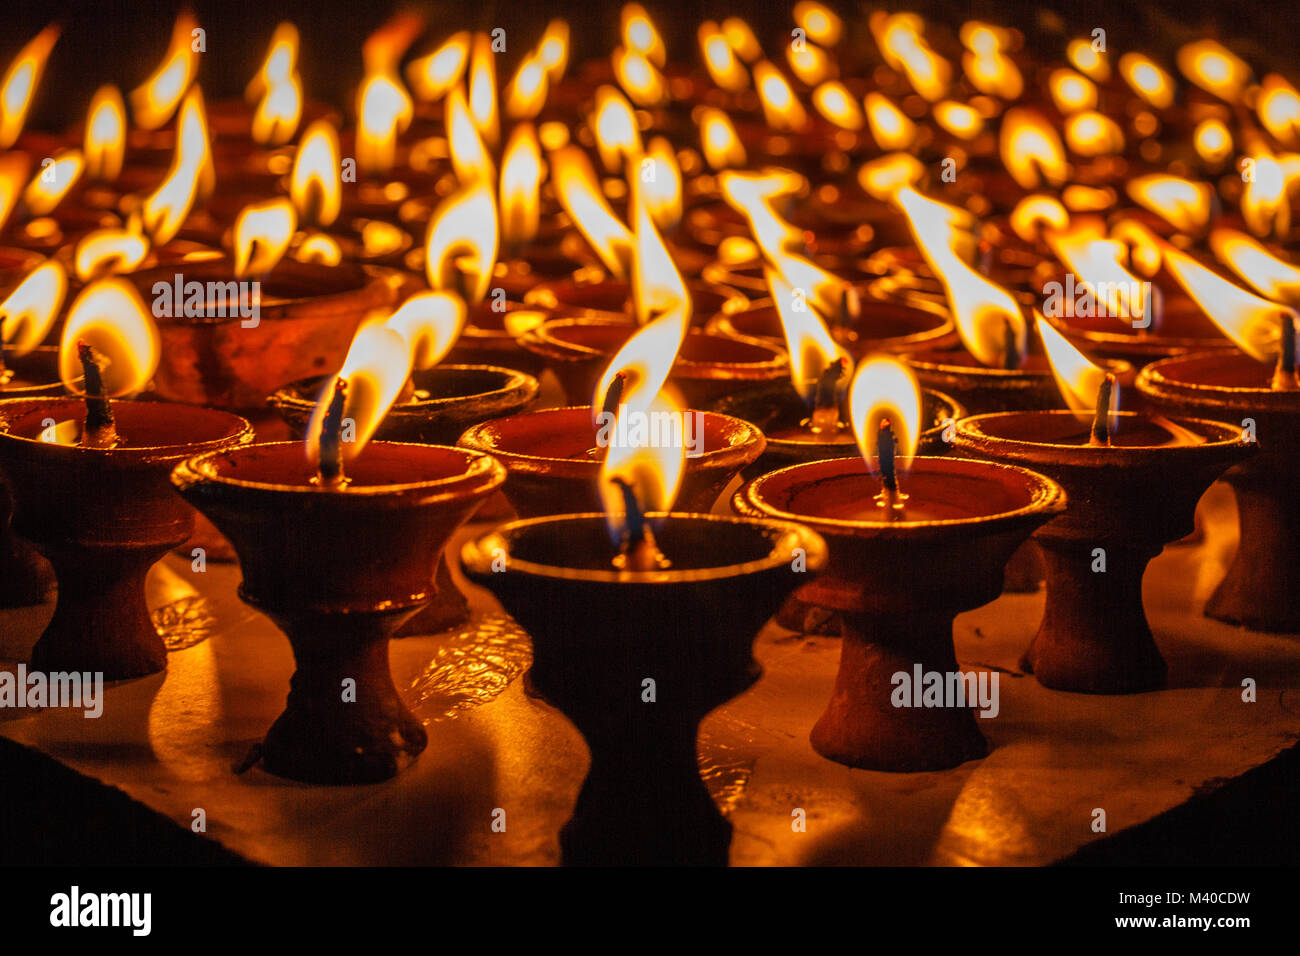 Oil lamps for the evening prayers burning at Boudhanath stupa, Kathmandu, Nepal. Stock Photo